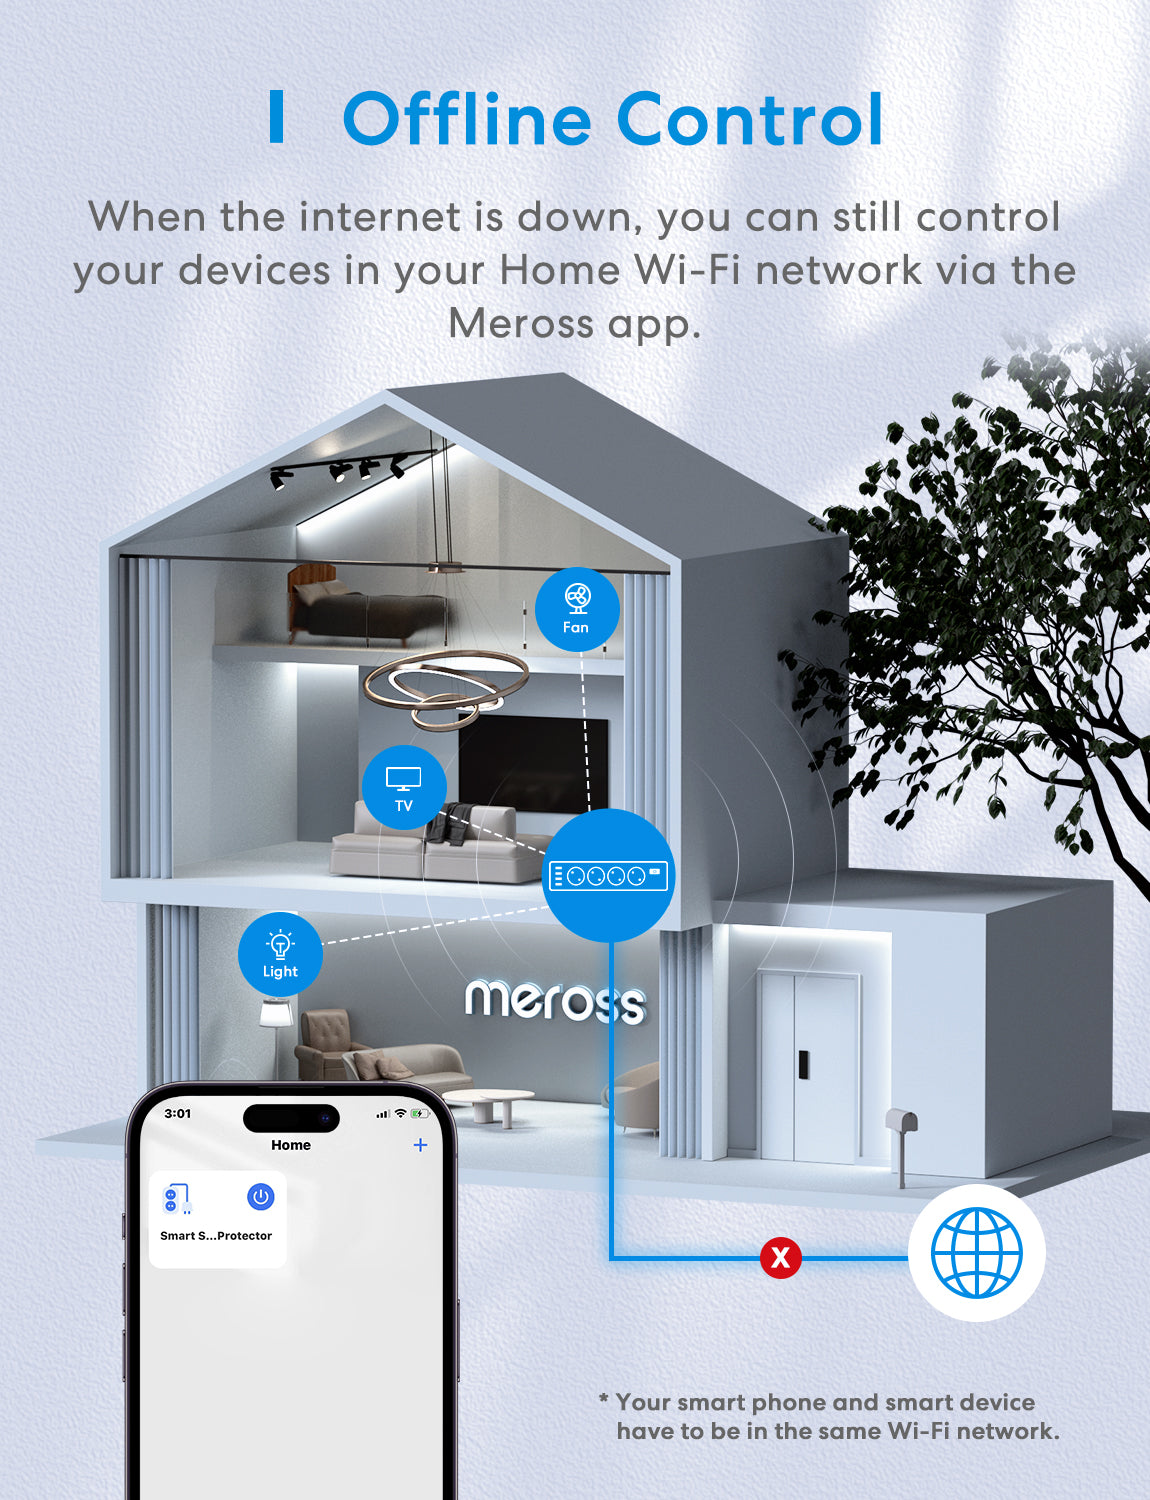 The Apple Homekit smart home system